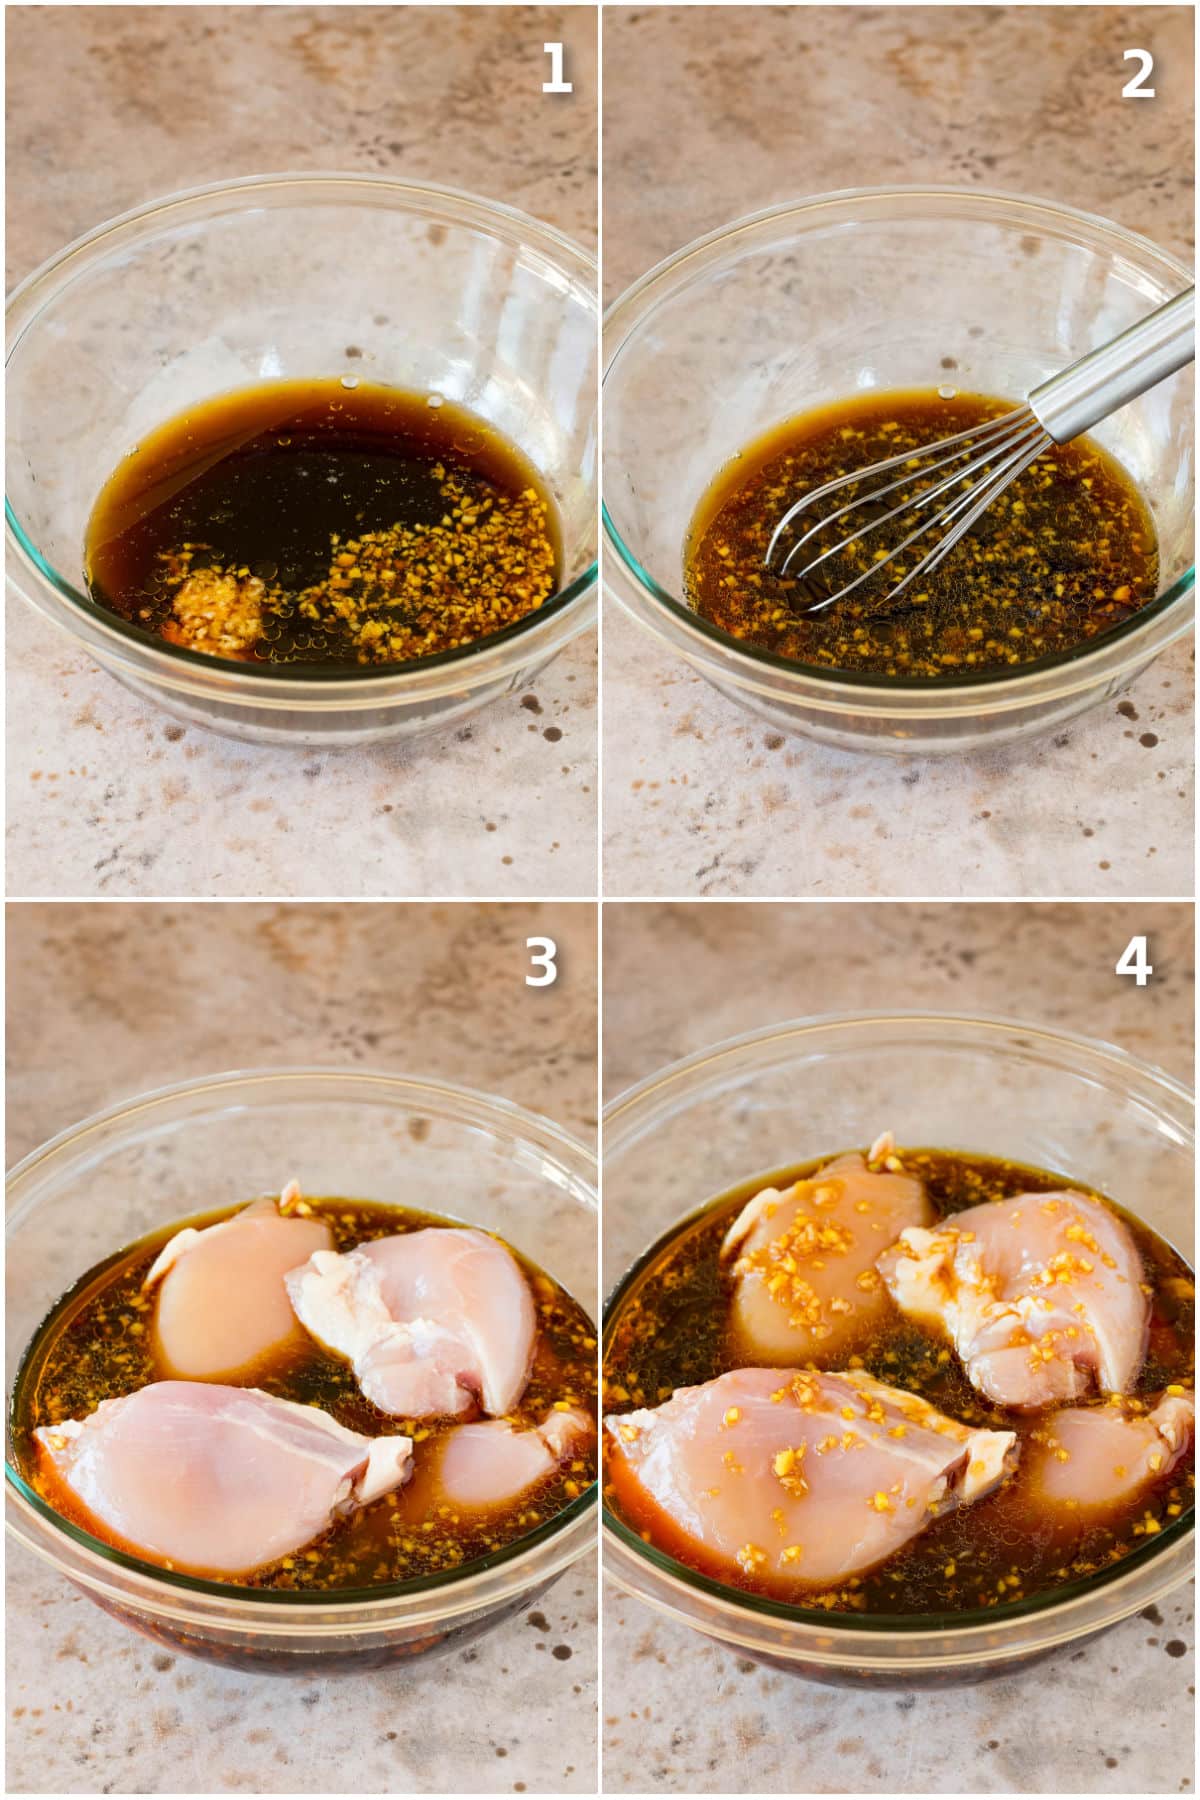 Step by step process shots showing how to make teriyaki marinade.